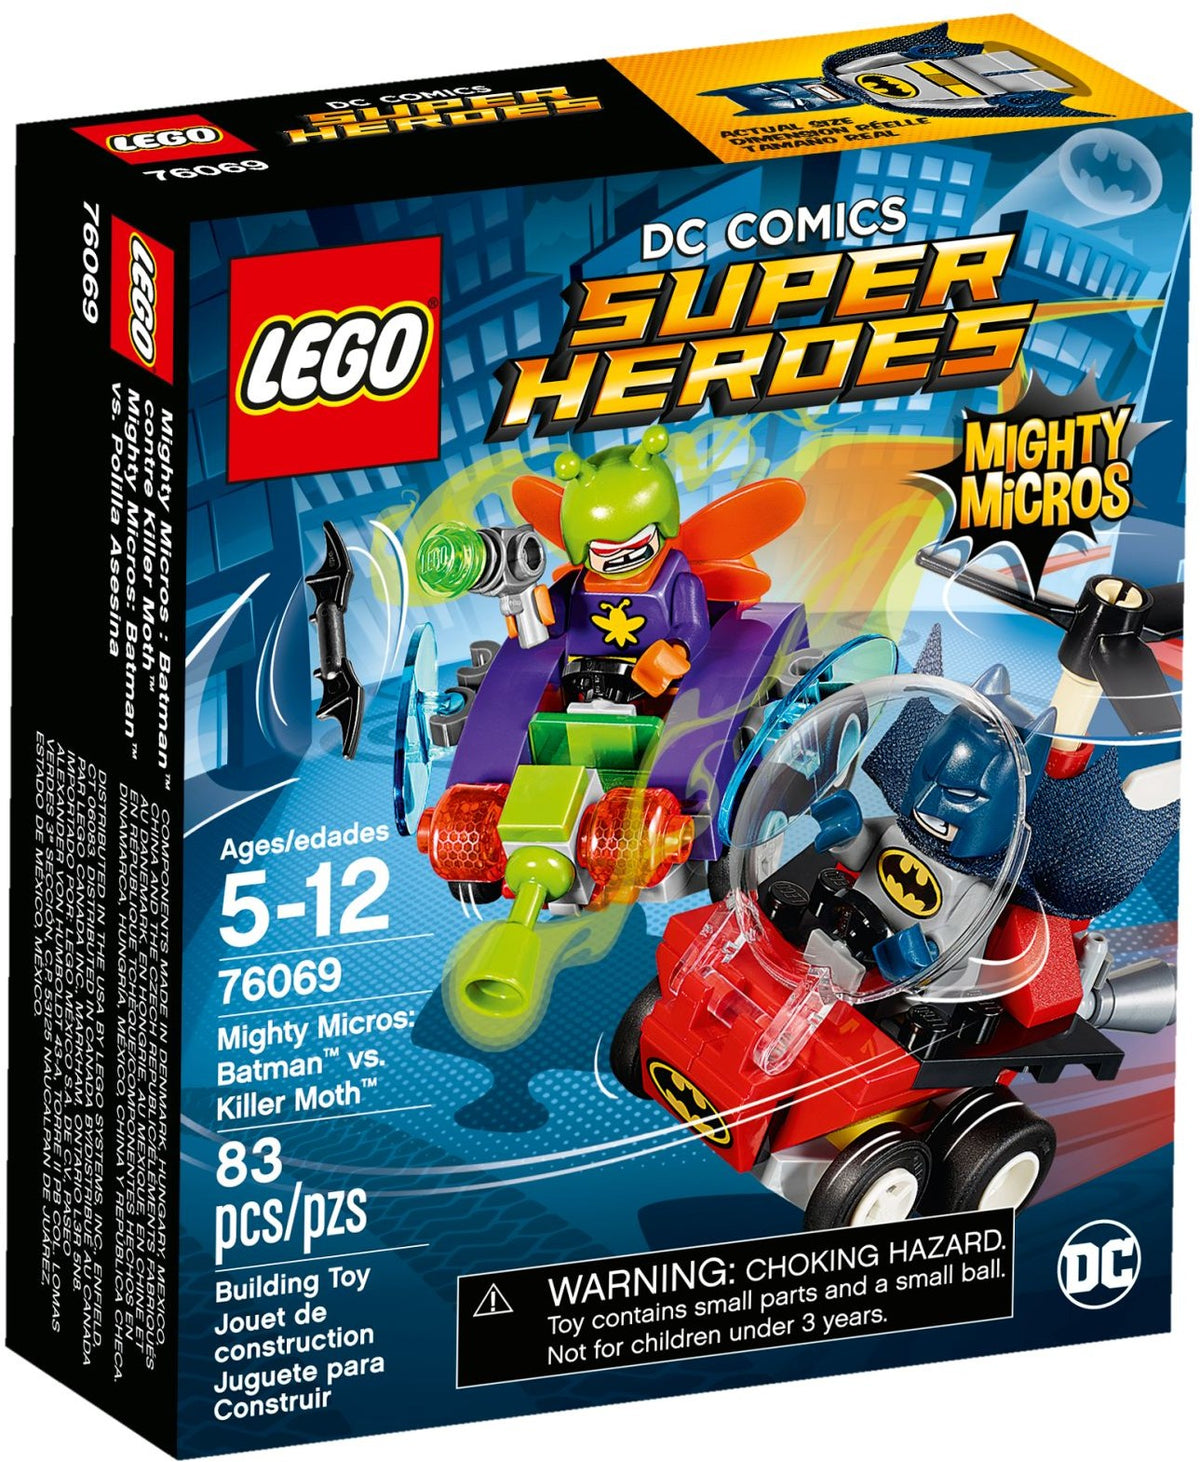 LEGO DC Super Heroes 76069 Mighty Micros: Batman vs. Killer Moth